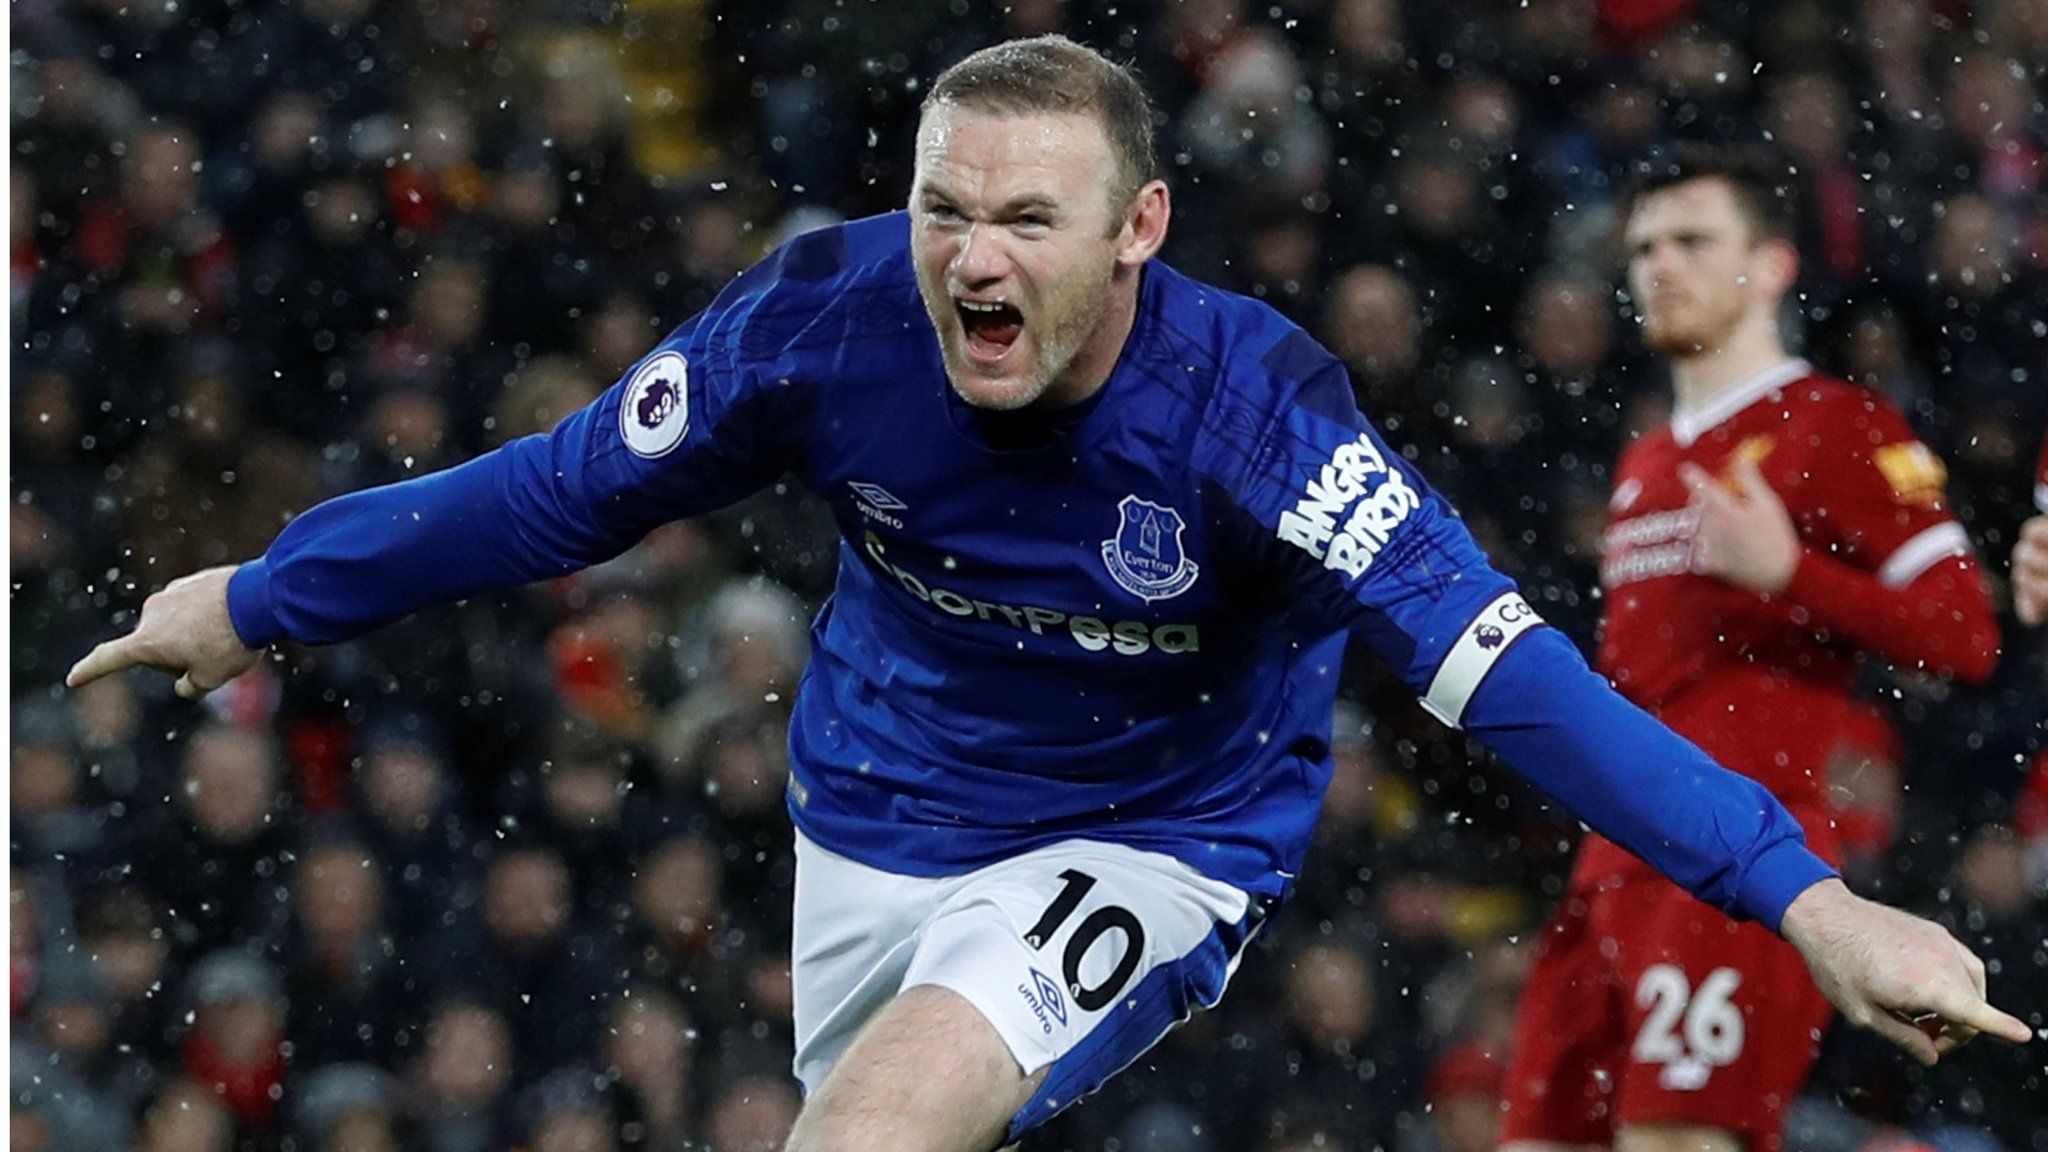 Wayne Rooney celebrates scoring for Everton against Liverpool